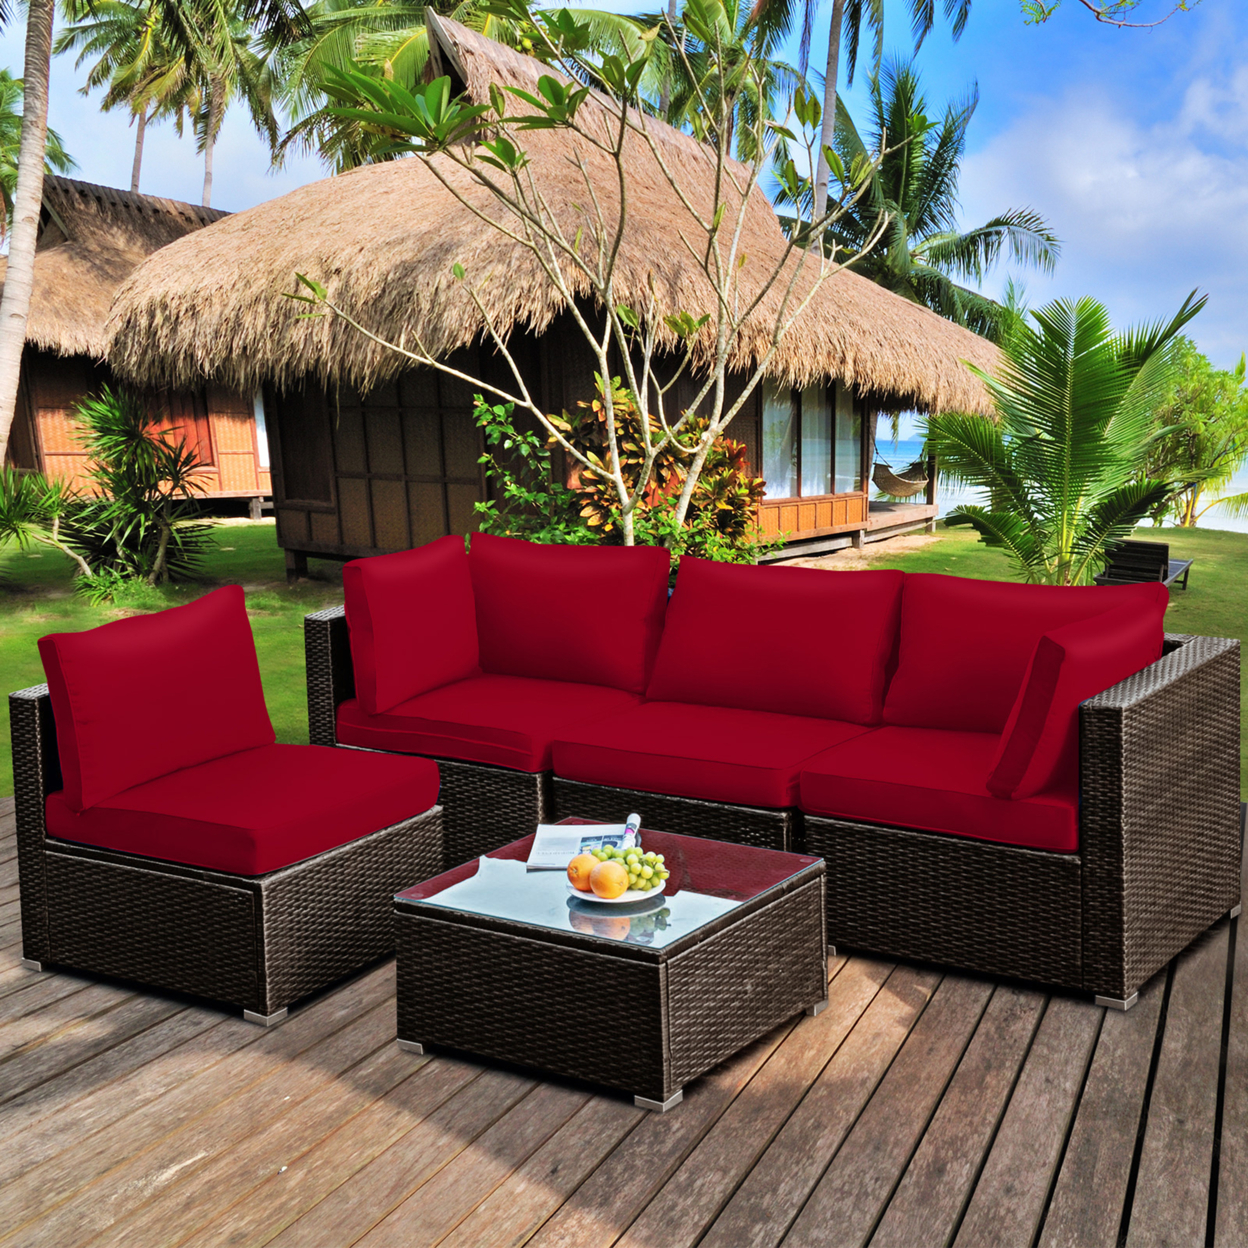 5PCS Rattan Patio Conversation Set Sofa Furniture Set W/ Red Cushions